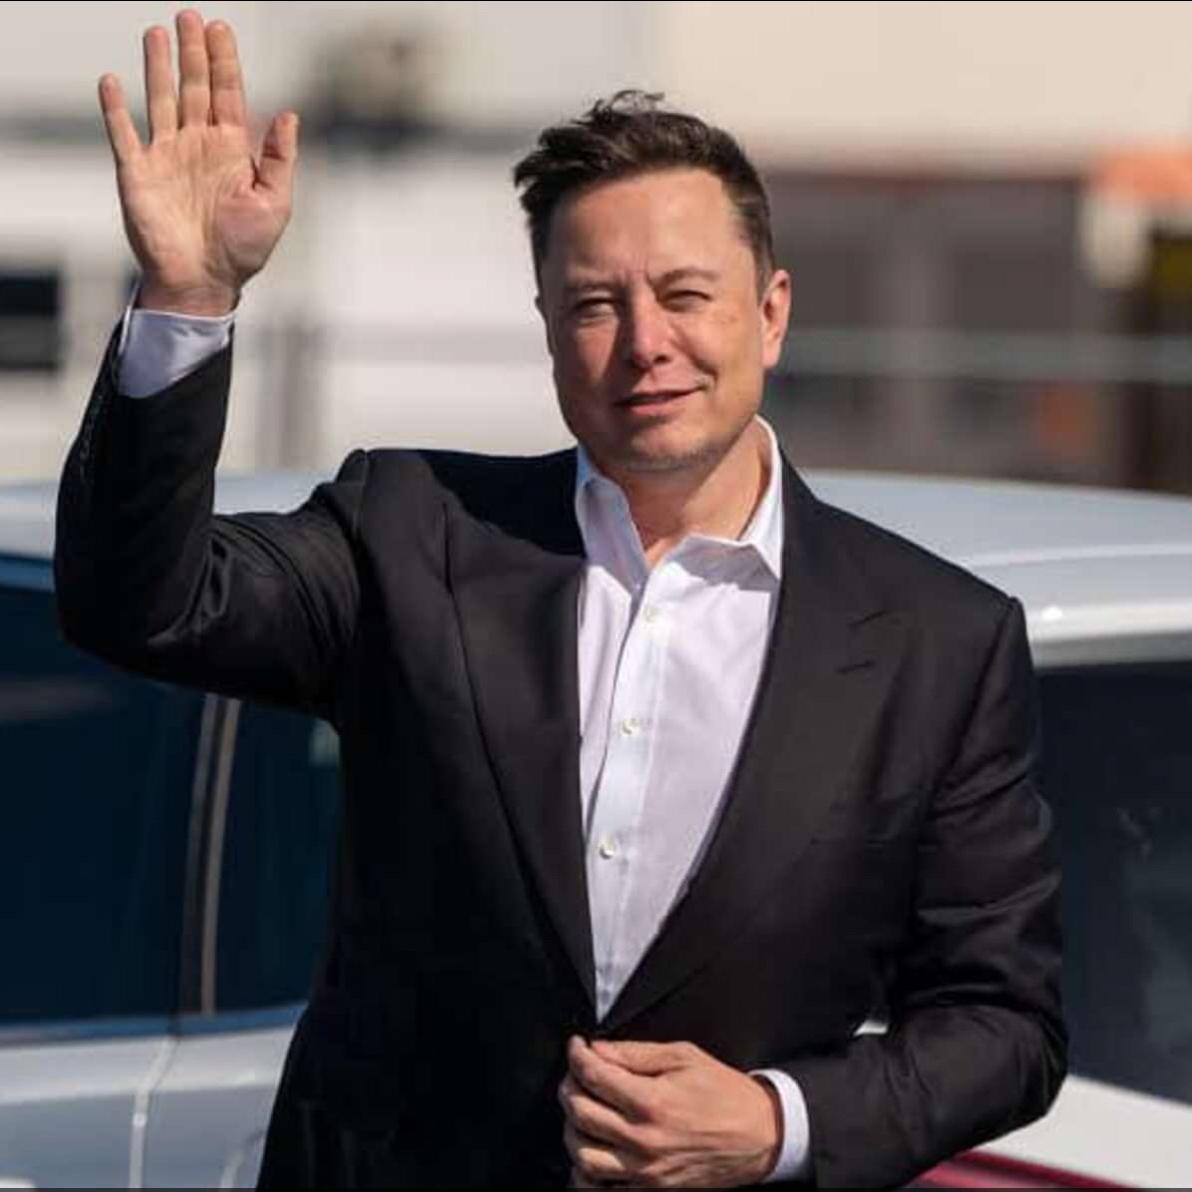 Elon musk's images